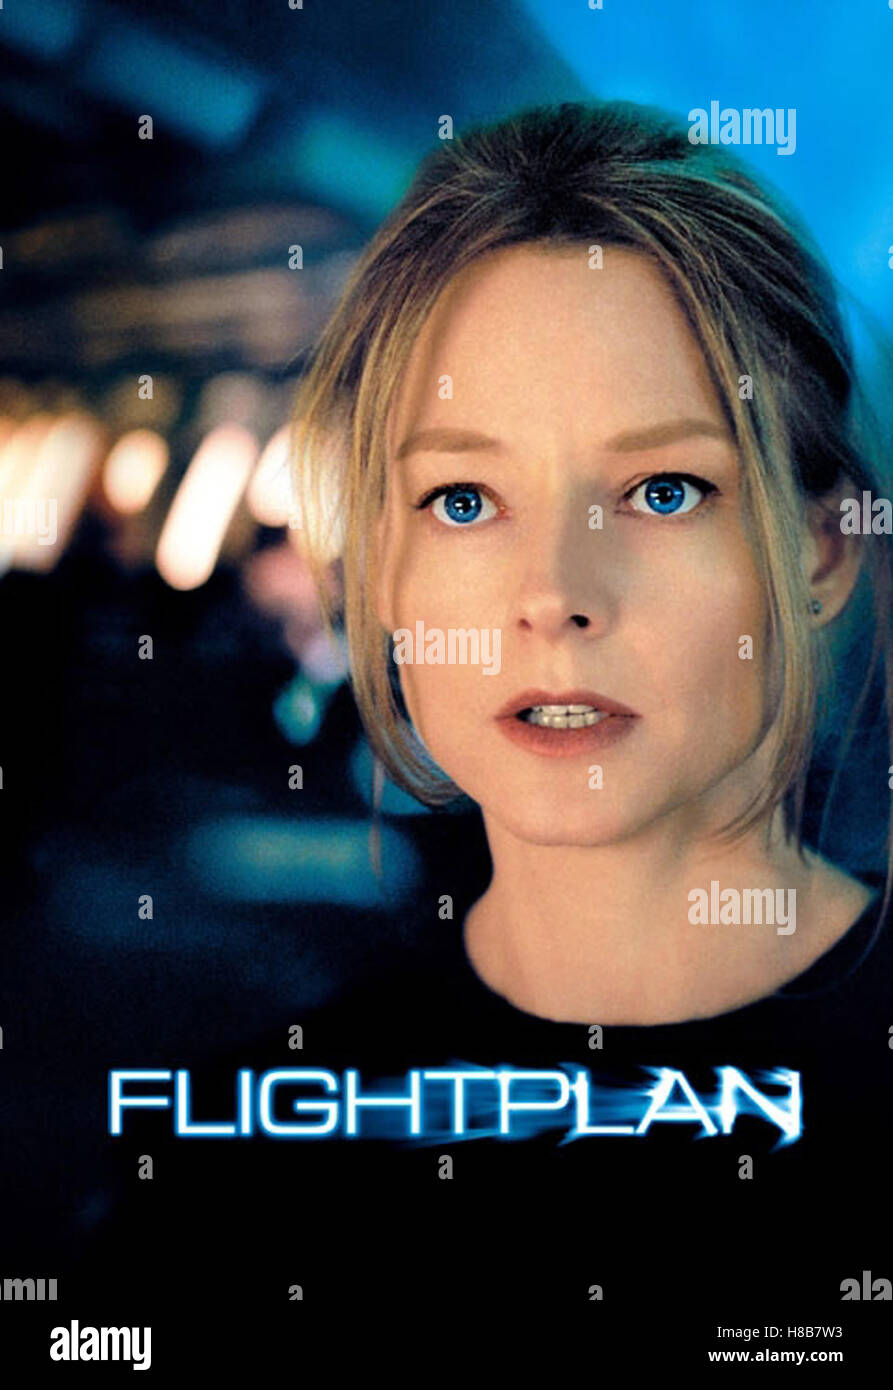 Flightplan - Ohne jede Spur, (FLIGHTPLAN) USA 2005, Regie: Robert Schwentke, JODIE FOSTER, Key: Plakat, Stock Photo